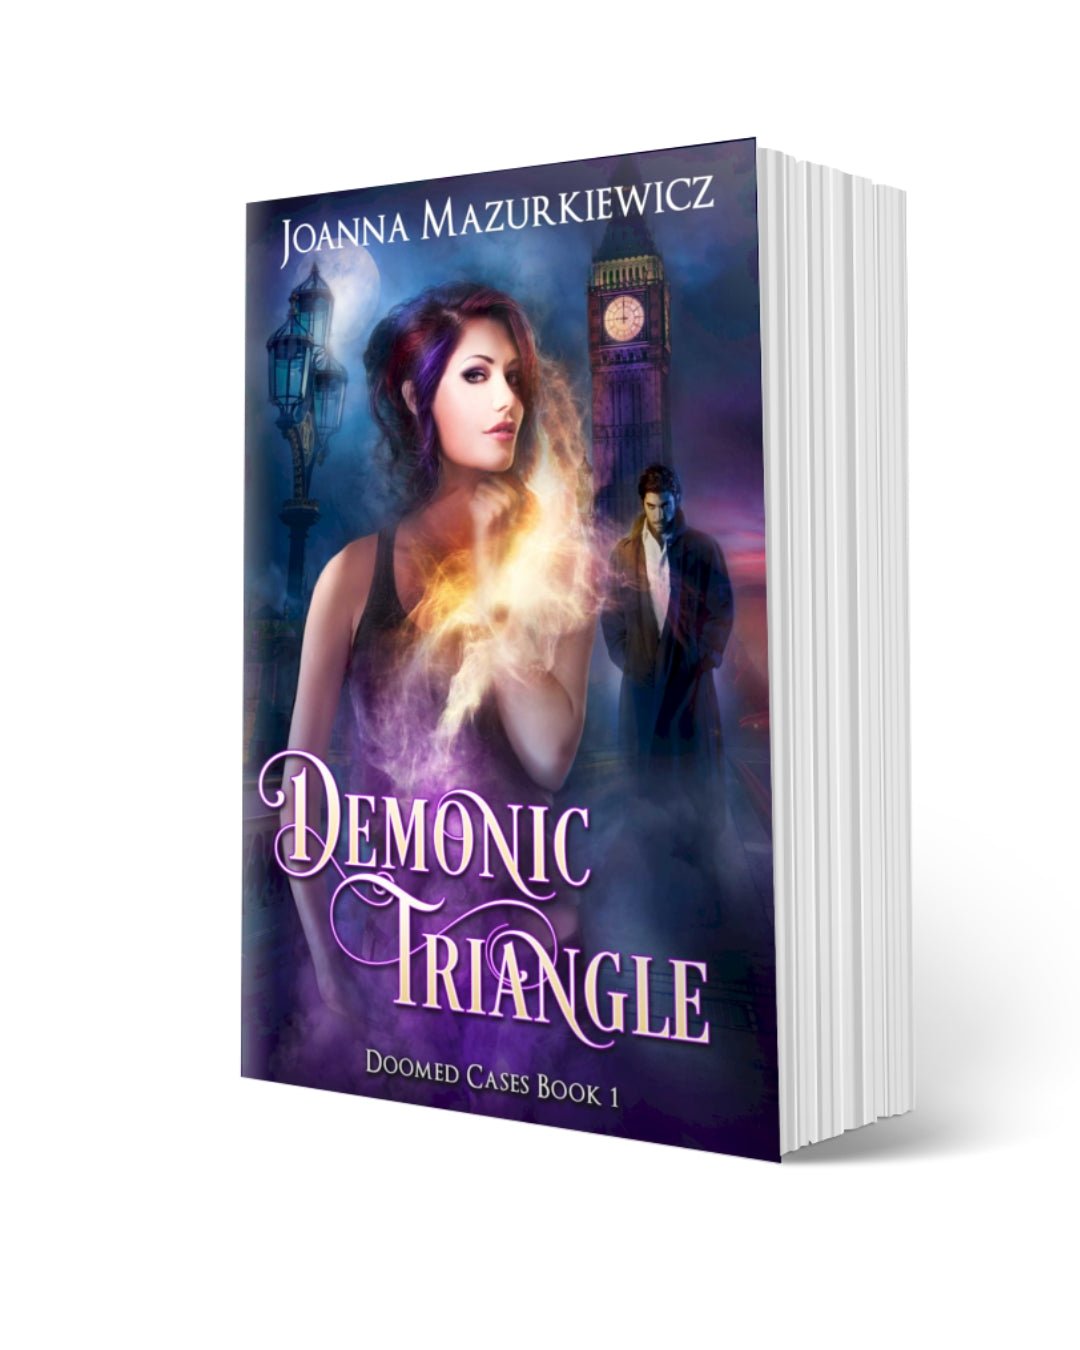 Paperback Copy of Demonic Triangle (Doomed Cases Book 1) - JMazurkiewiczbookstore